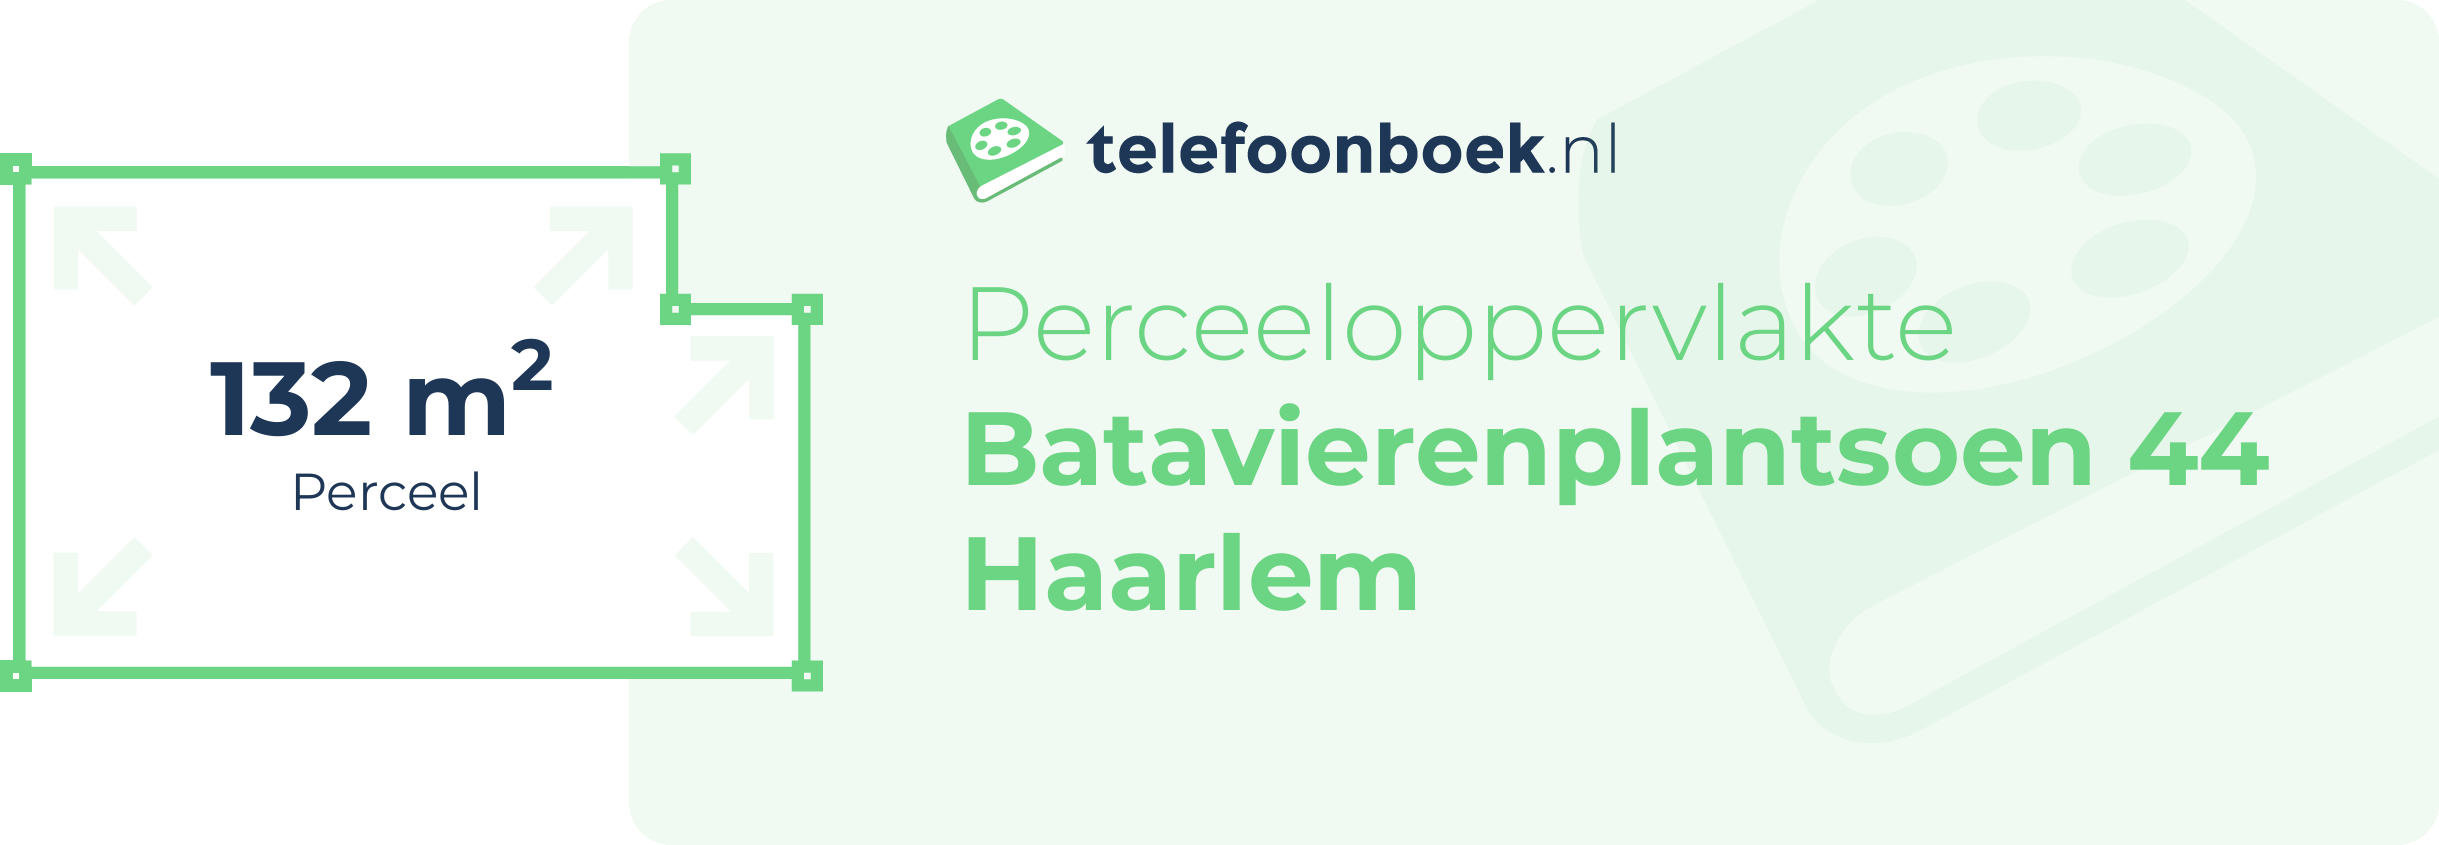 Perceeloppervlakte Batavierenplantsoen 44 Haarlem